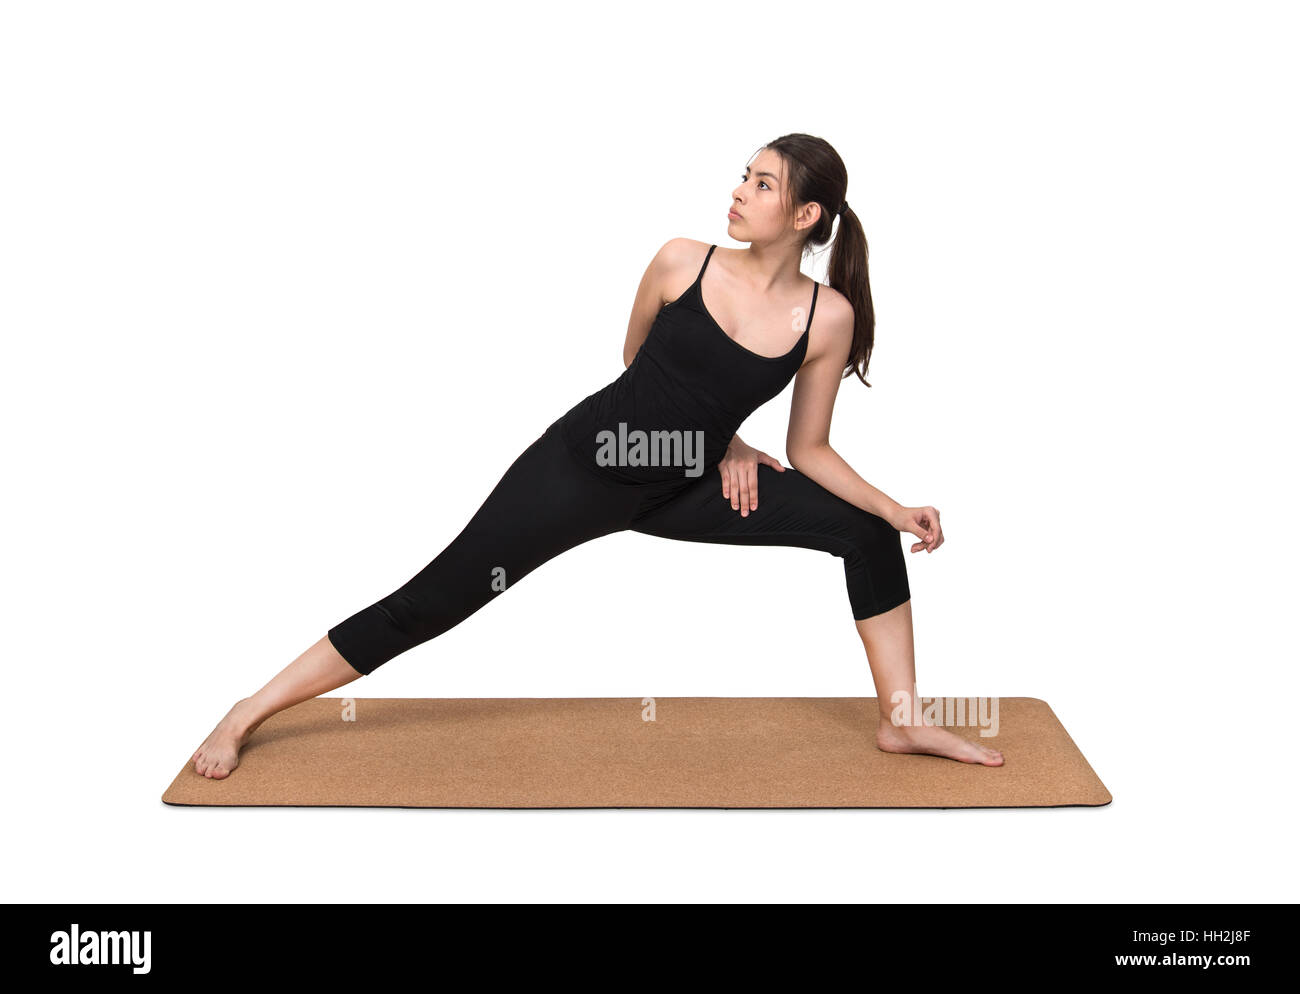 Young woman exercise yoga pose on cork yoga mat on white background Stock Photo